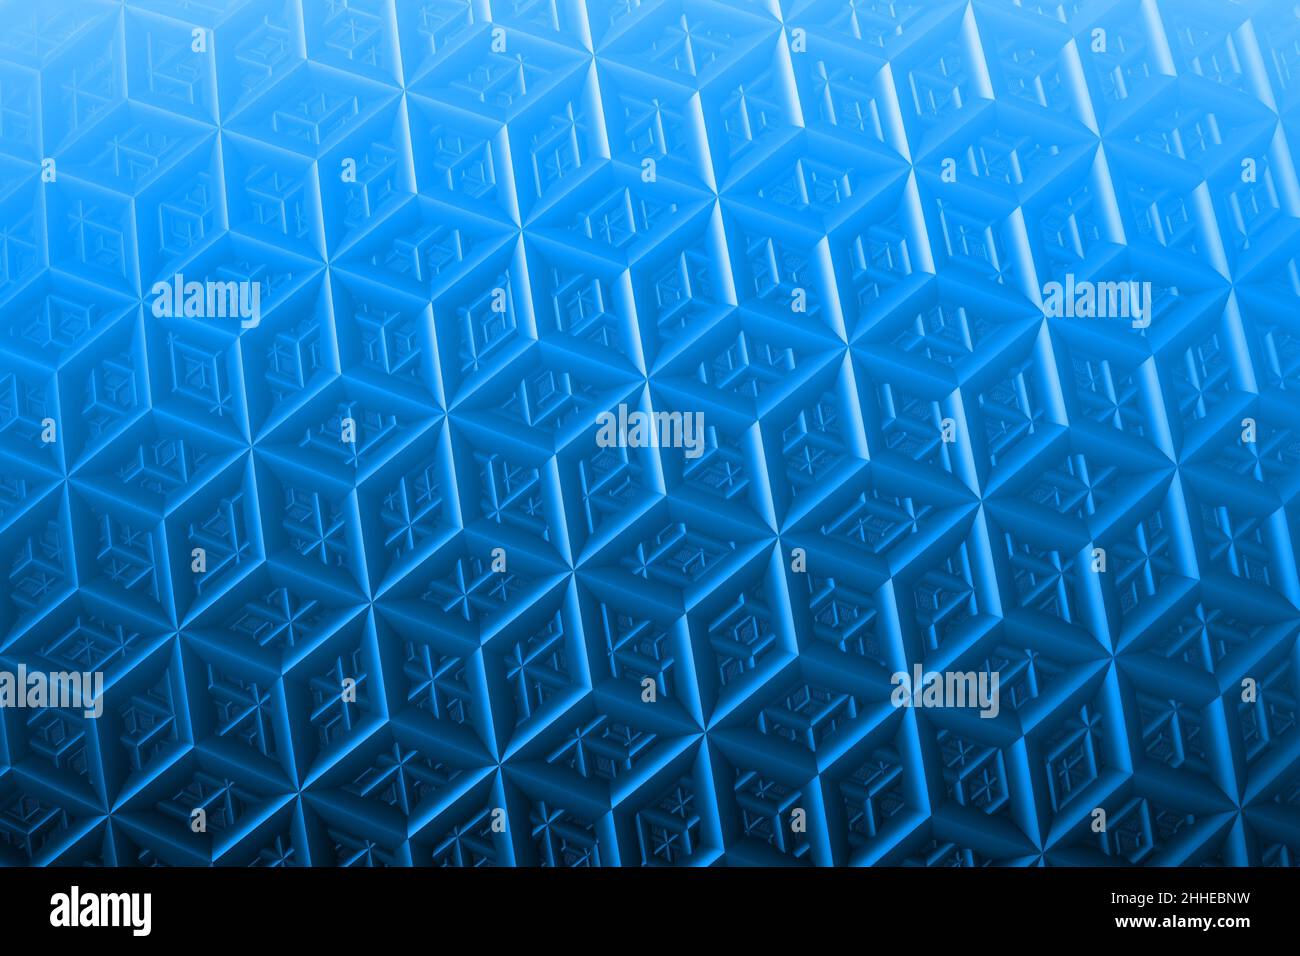 3d fractal background. decorative image for design Stock Photo